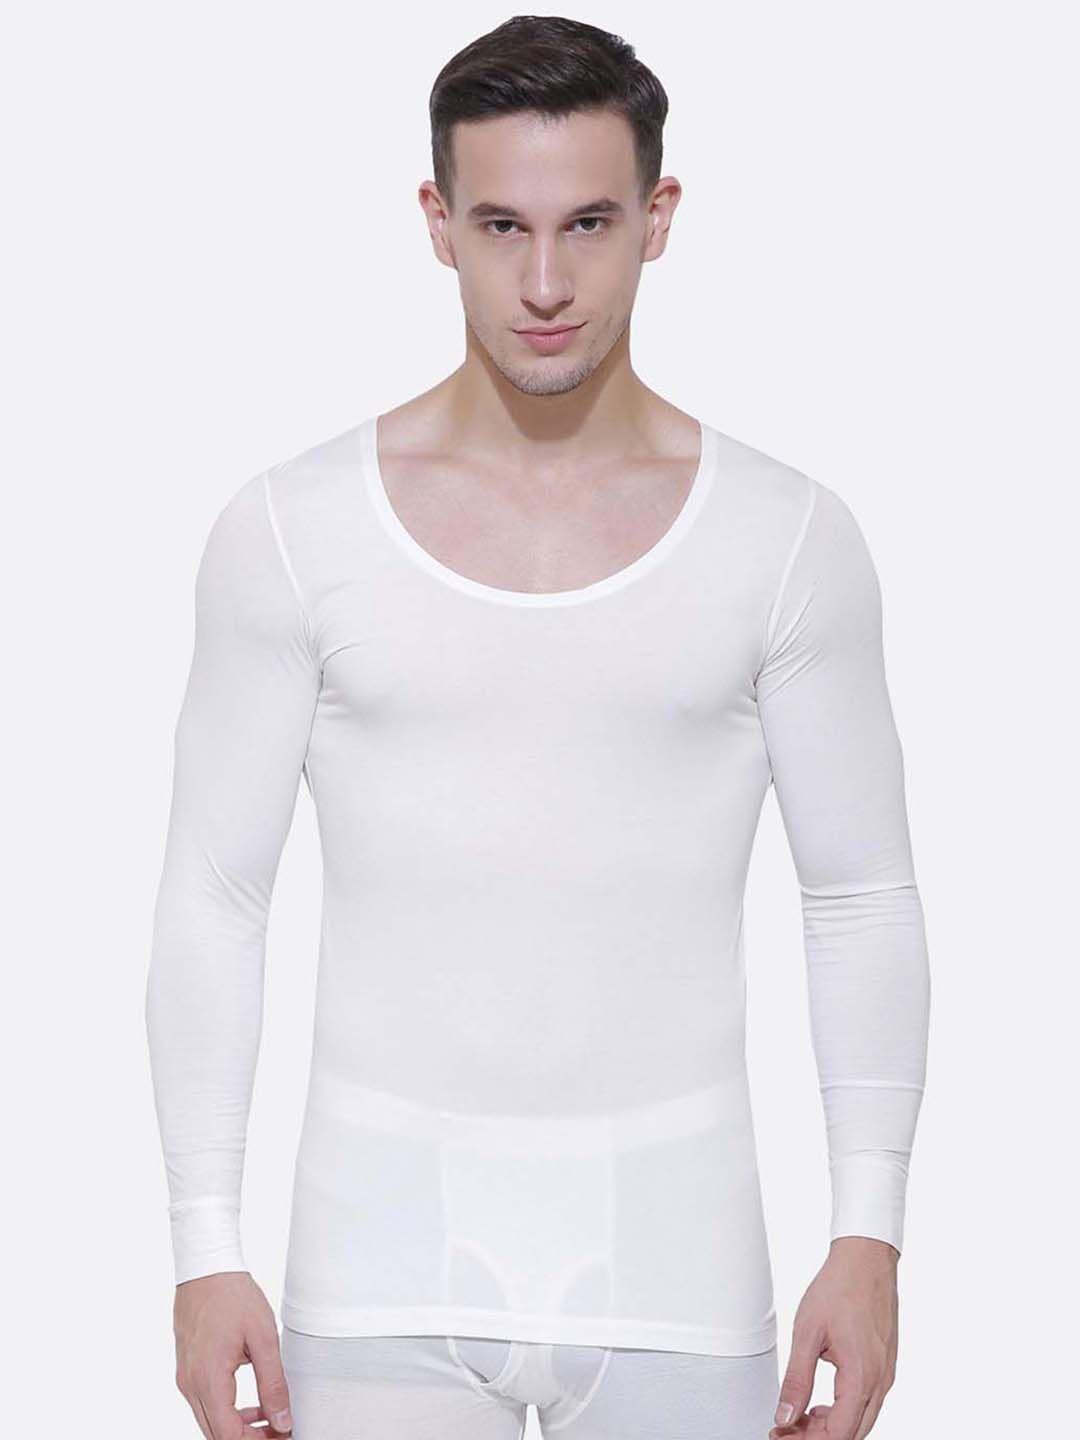 bodycare insider men off white cotton thermal tops